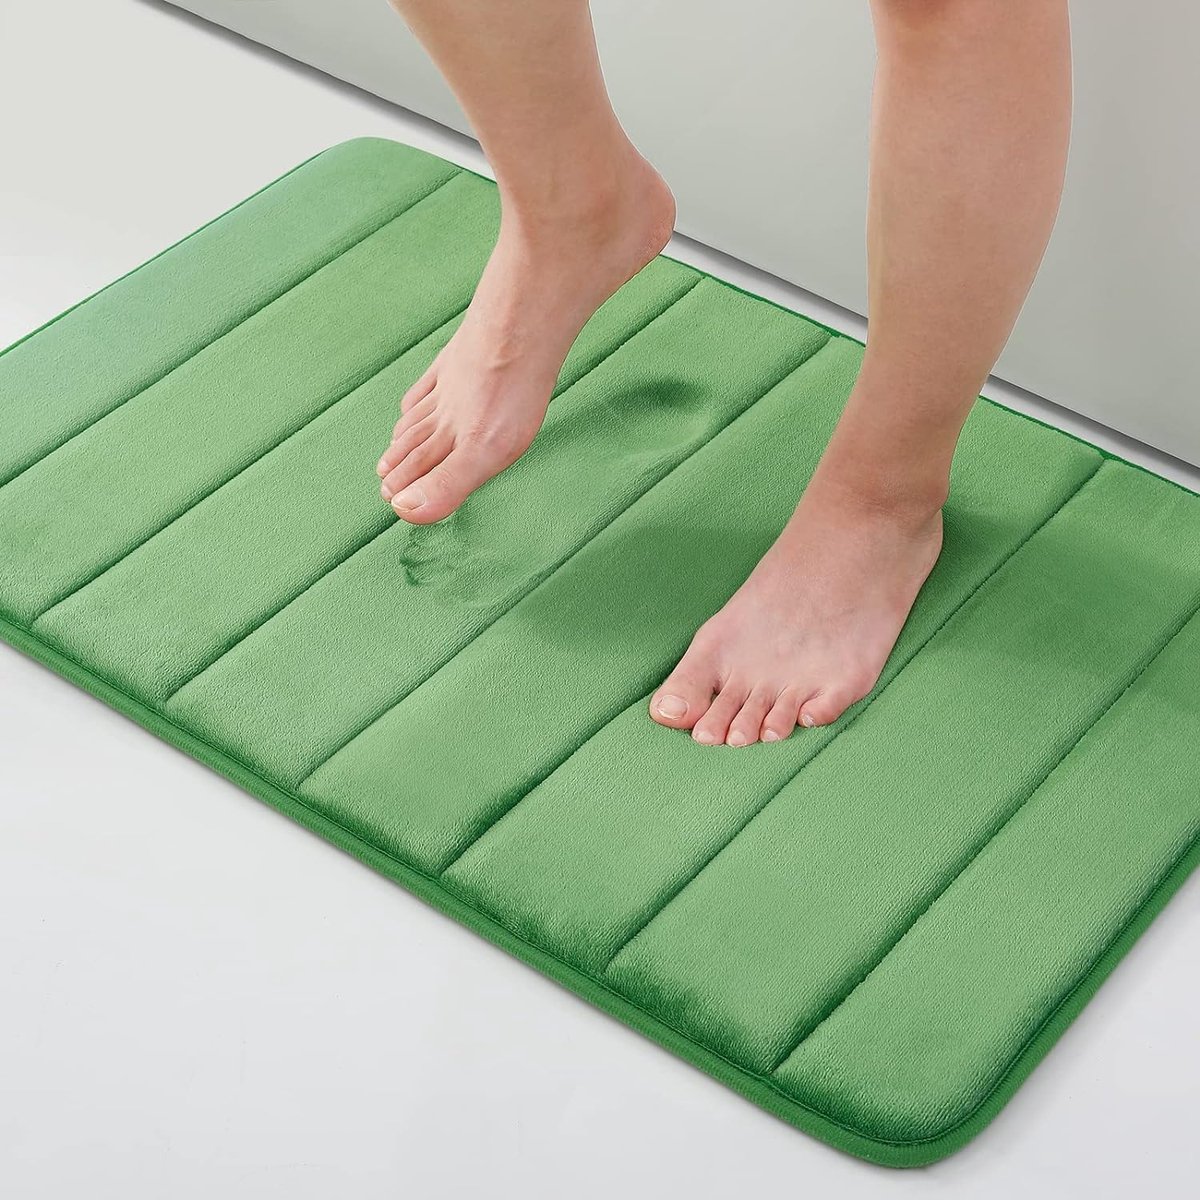 Traagschuim badkamerbadmat, absorberende antislipbadmat, wasbare badmat, 50 x 80 cm, groen Traagschuim badkamerbadmat, absorberende antislipbadmat, wasbare badmat, 50 x 80 cm, groen